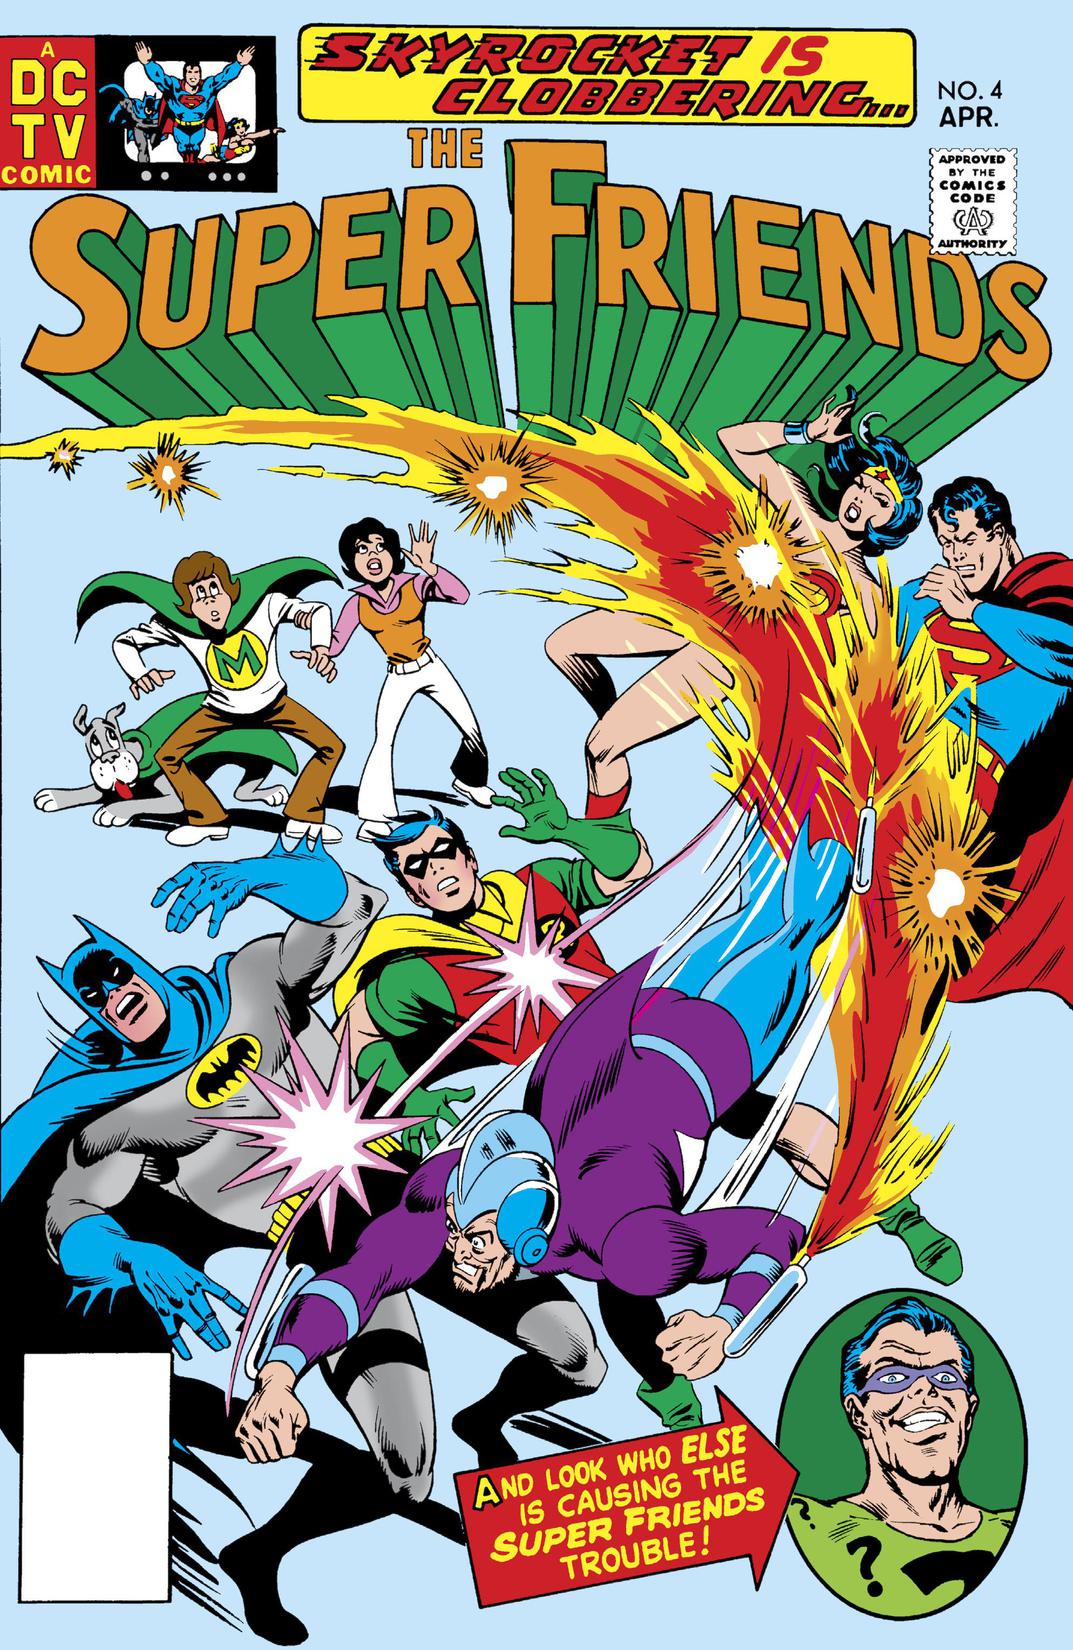 Super Friends (1976-) #4 preview images